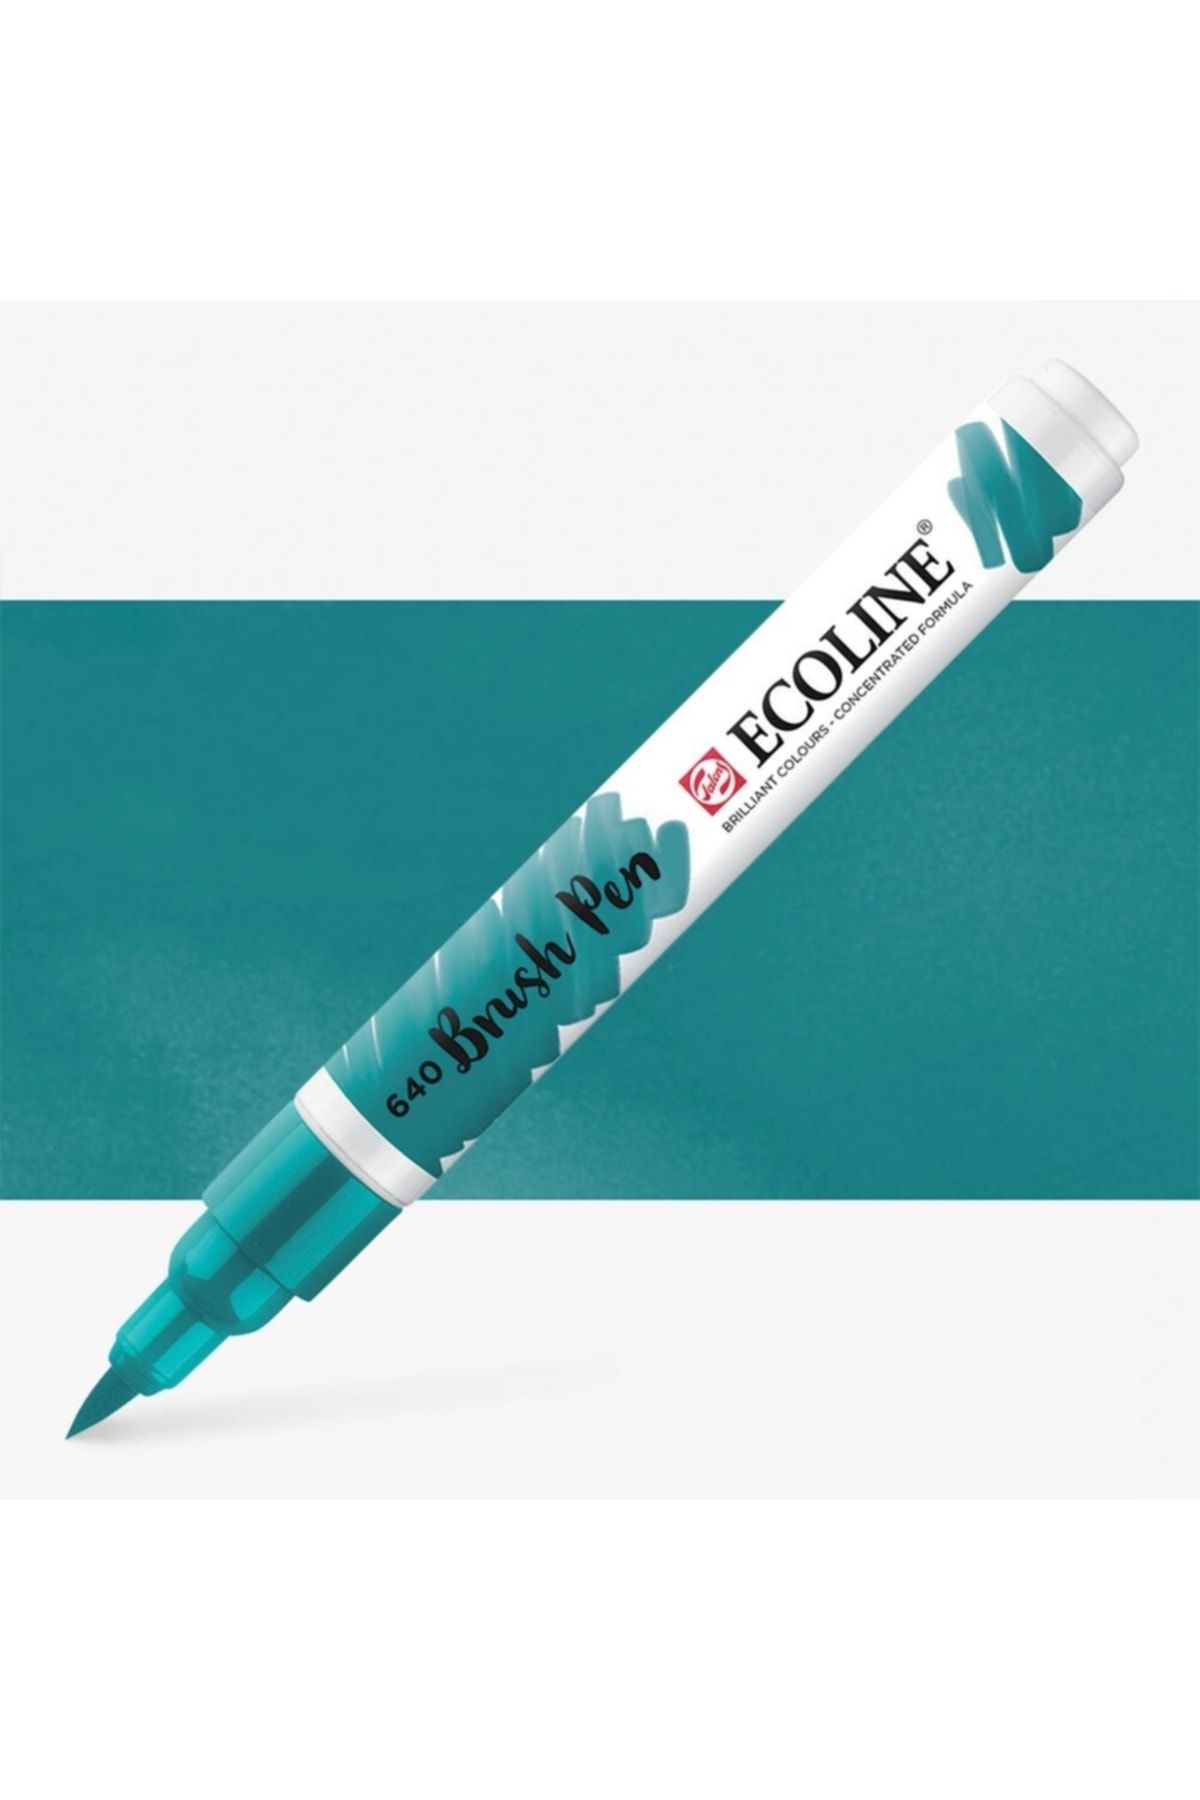 Talens Ecoline Suluboya Brush Pen Bluish Green 640